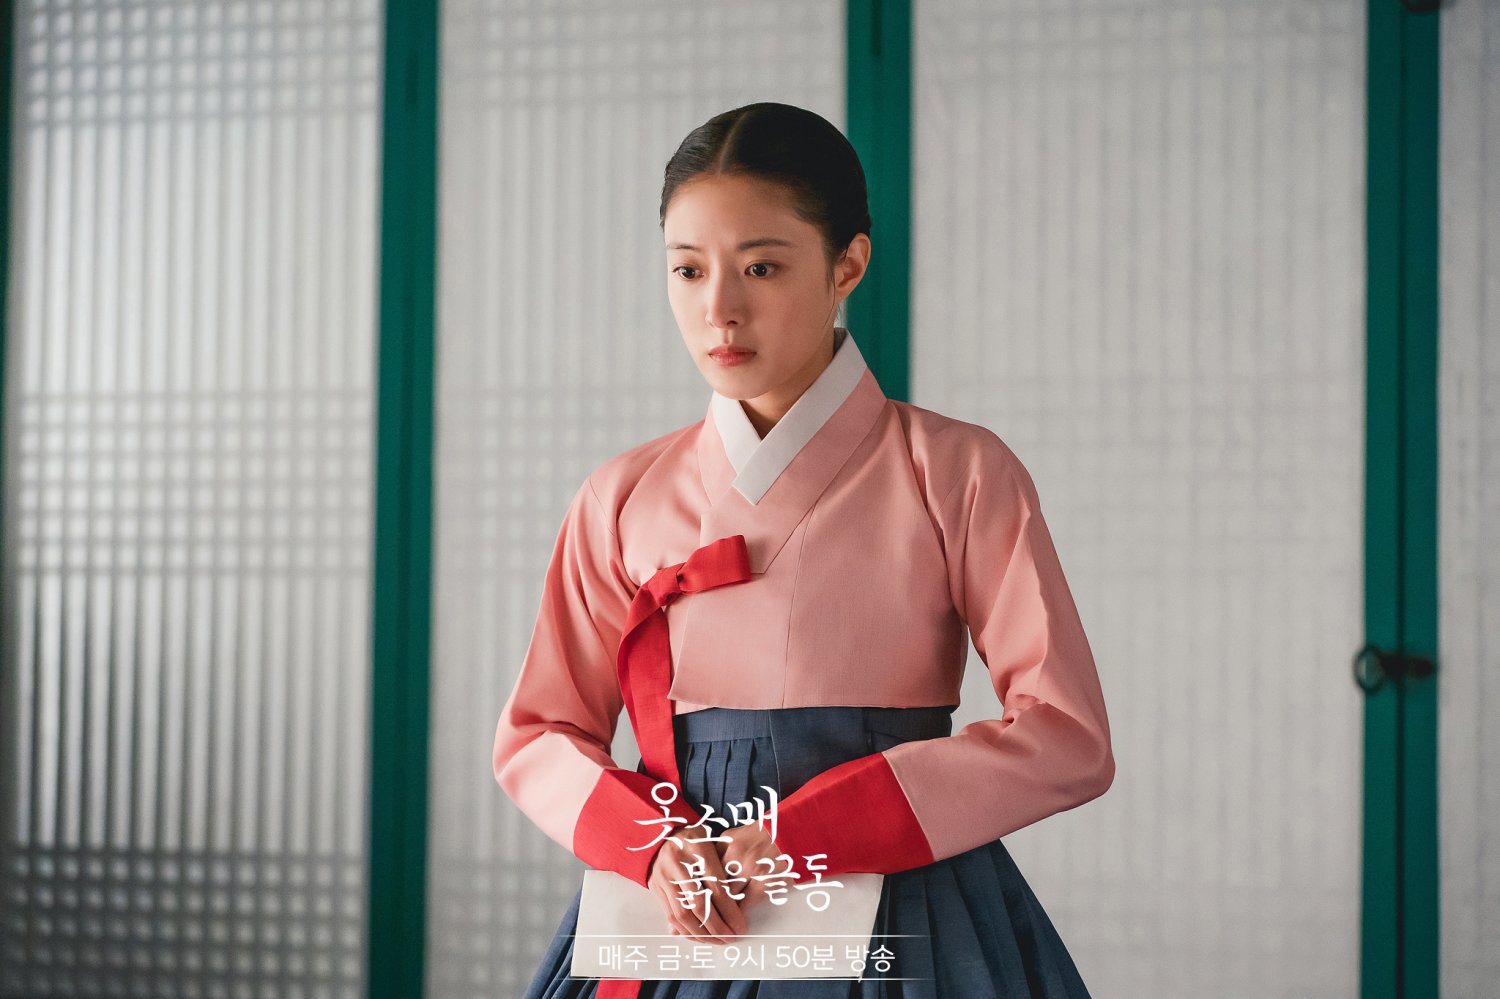 [Photos] New Stills Added for the Korean Drama 'The Red Sleeve' @ HanCinema